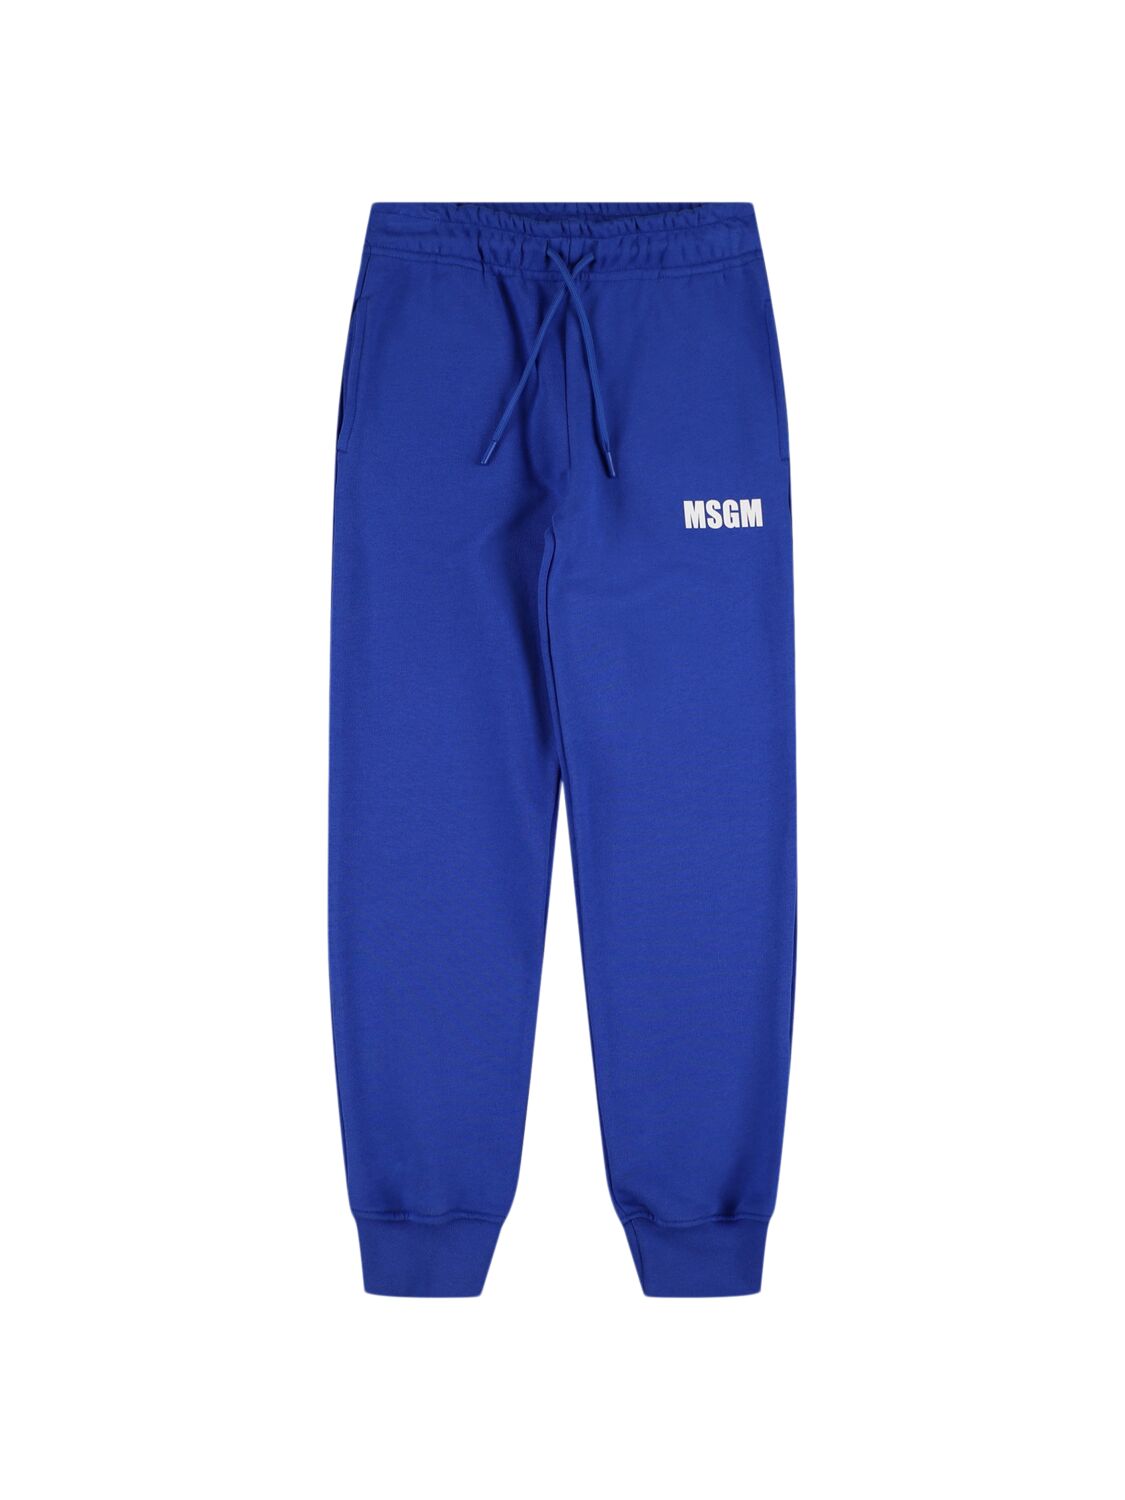 Msgm Cotton Sweatpants In Blue